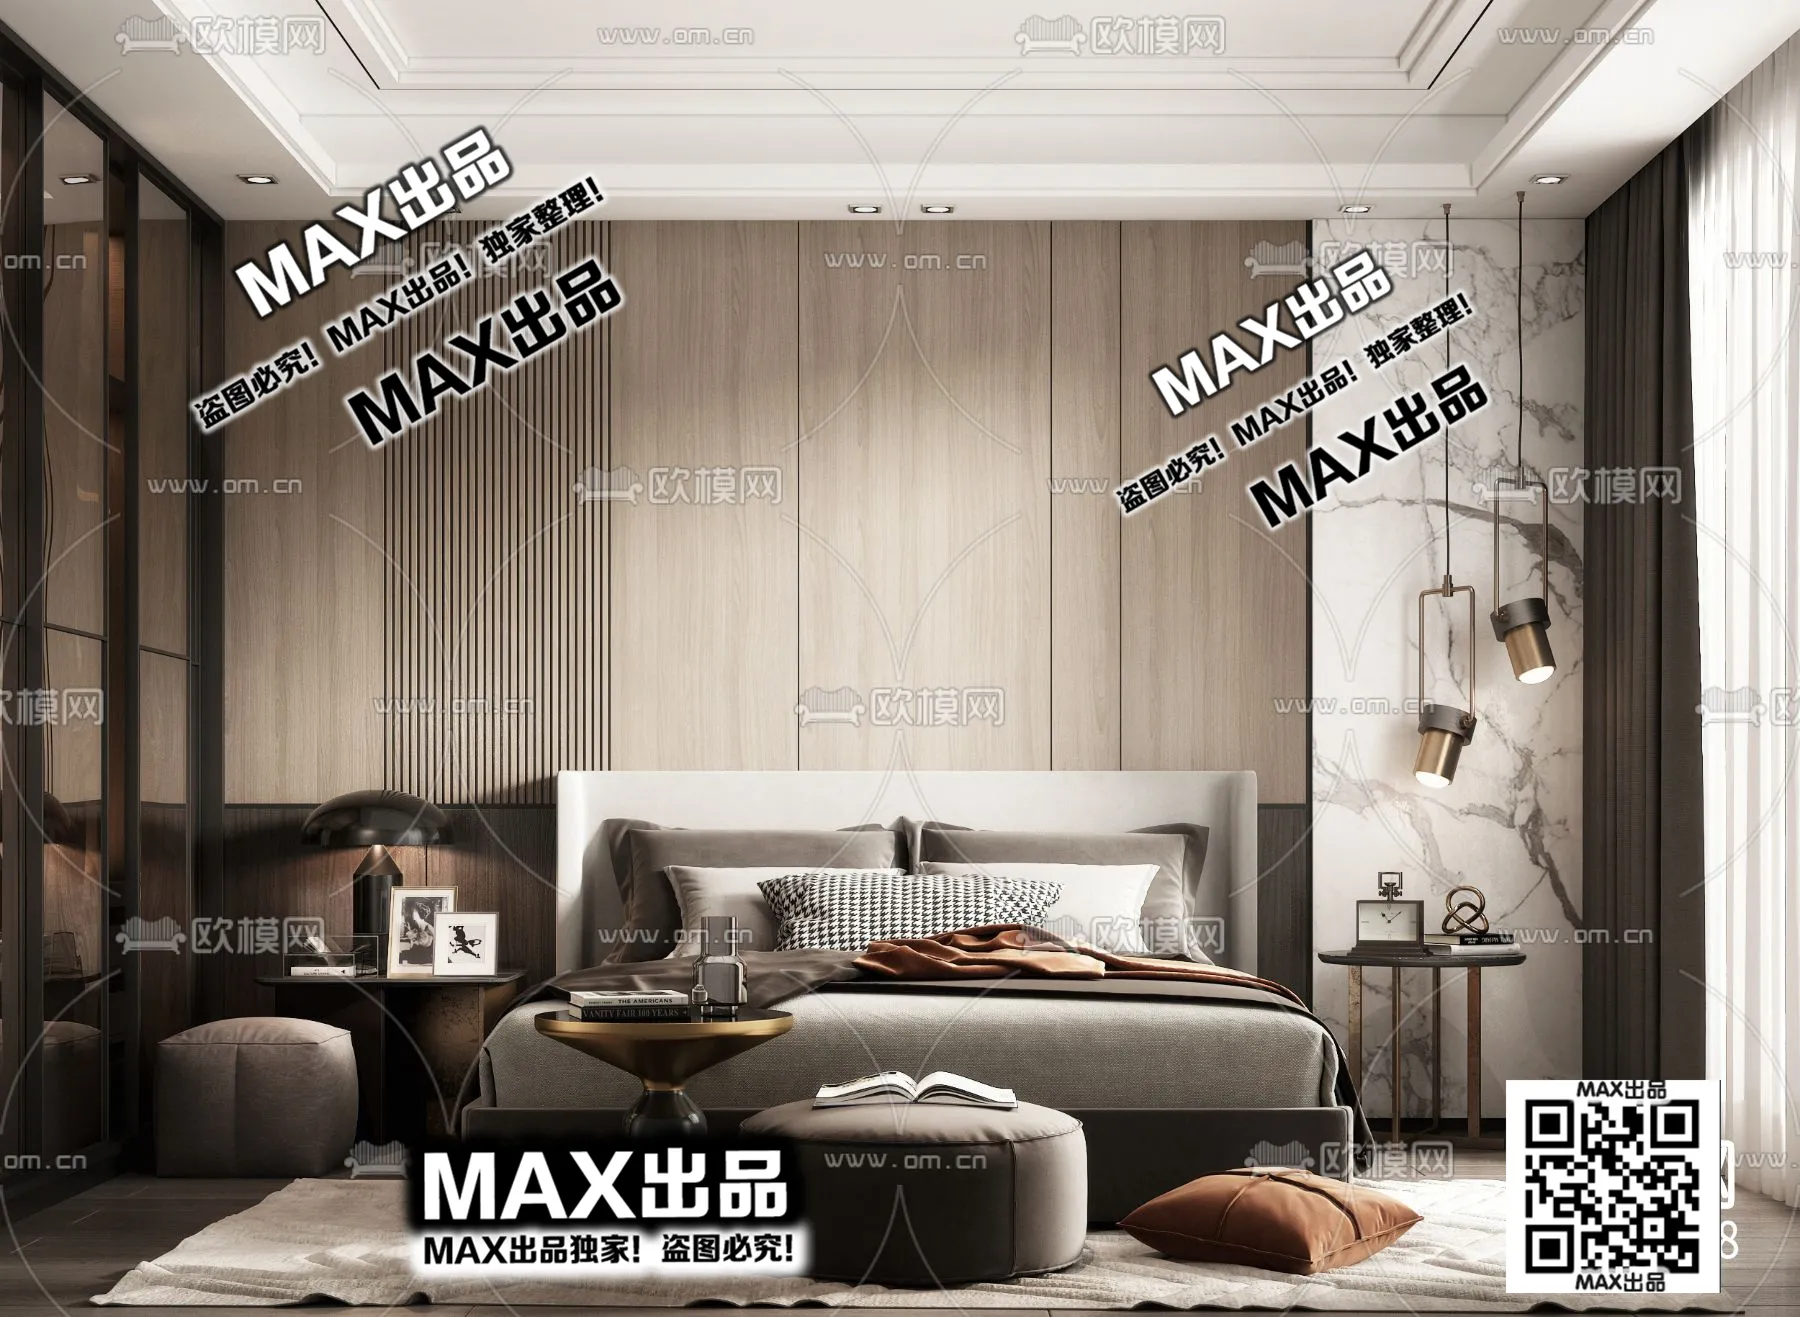 3DS MAX SCENES – LIVING ROOM – 011